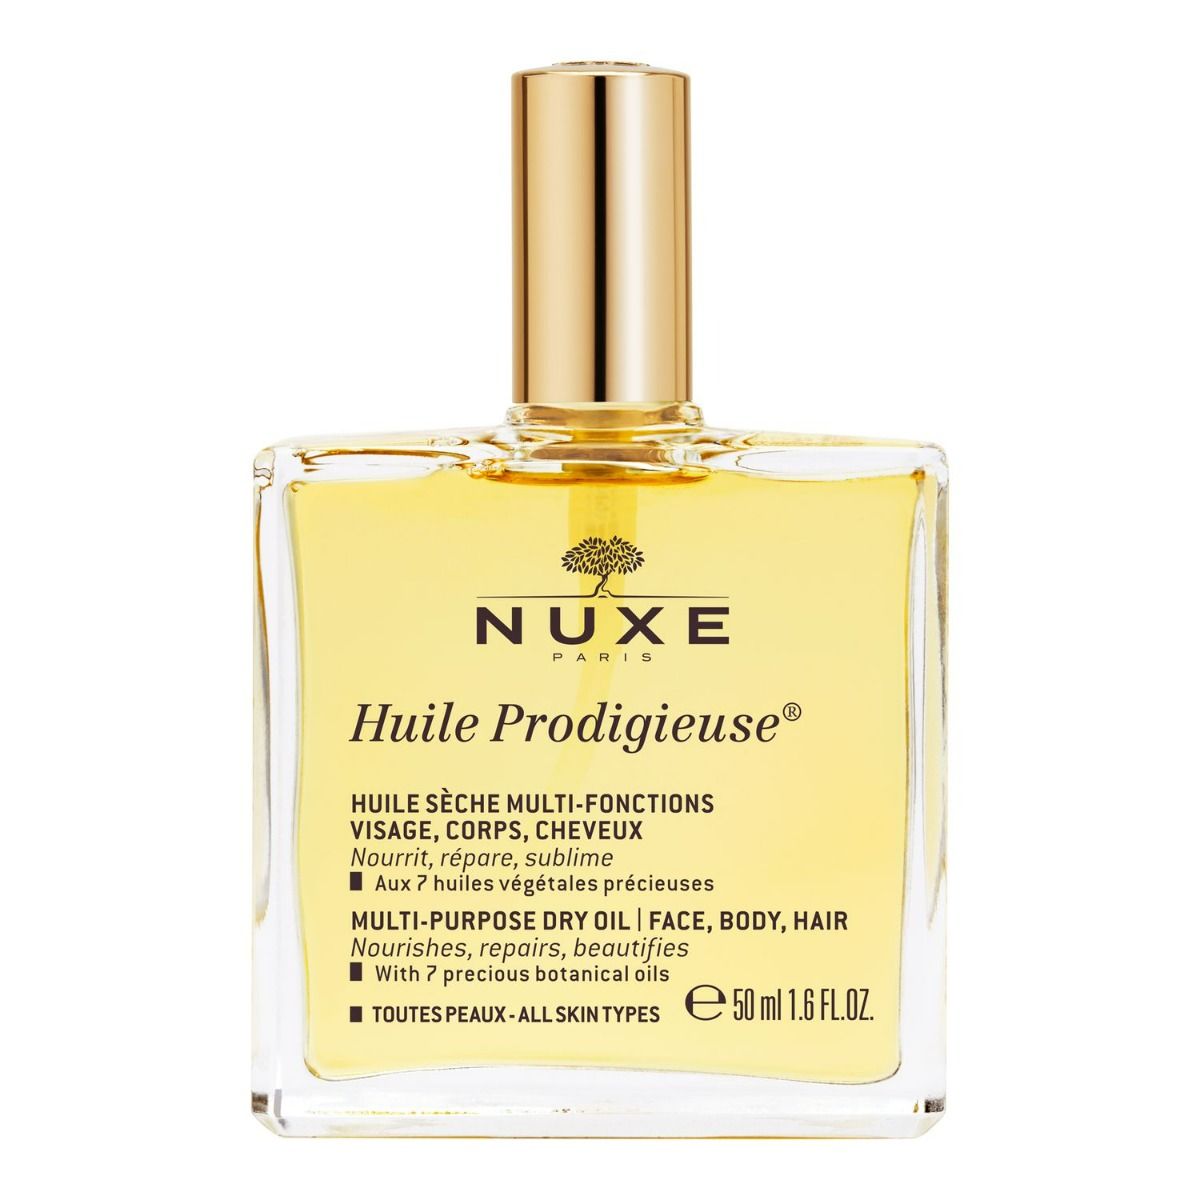 цена Nuxe Huile Prodigieuse масло для лица, тела и волос, 50 ml